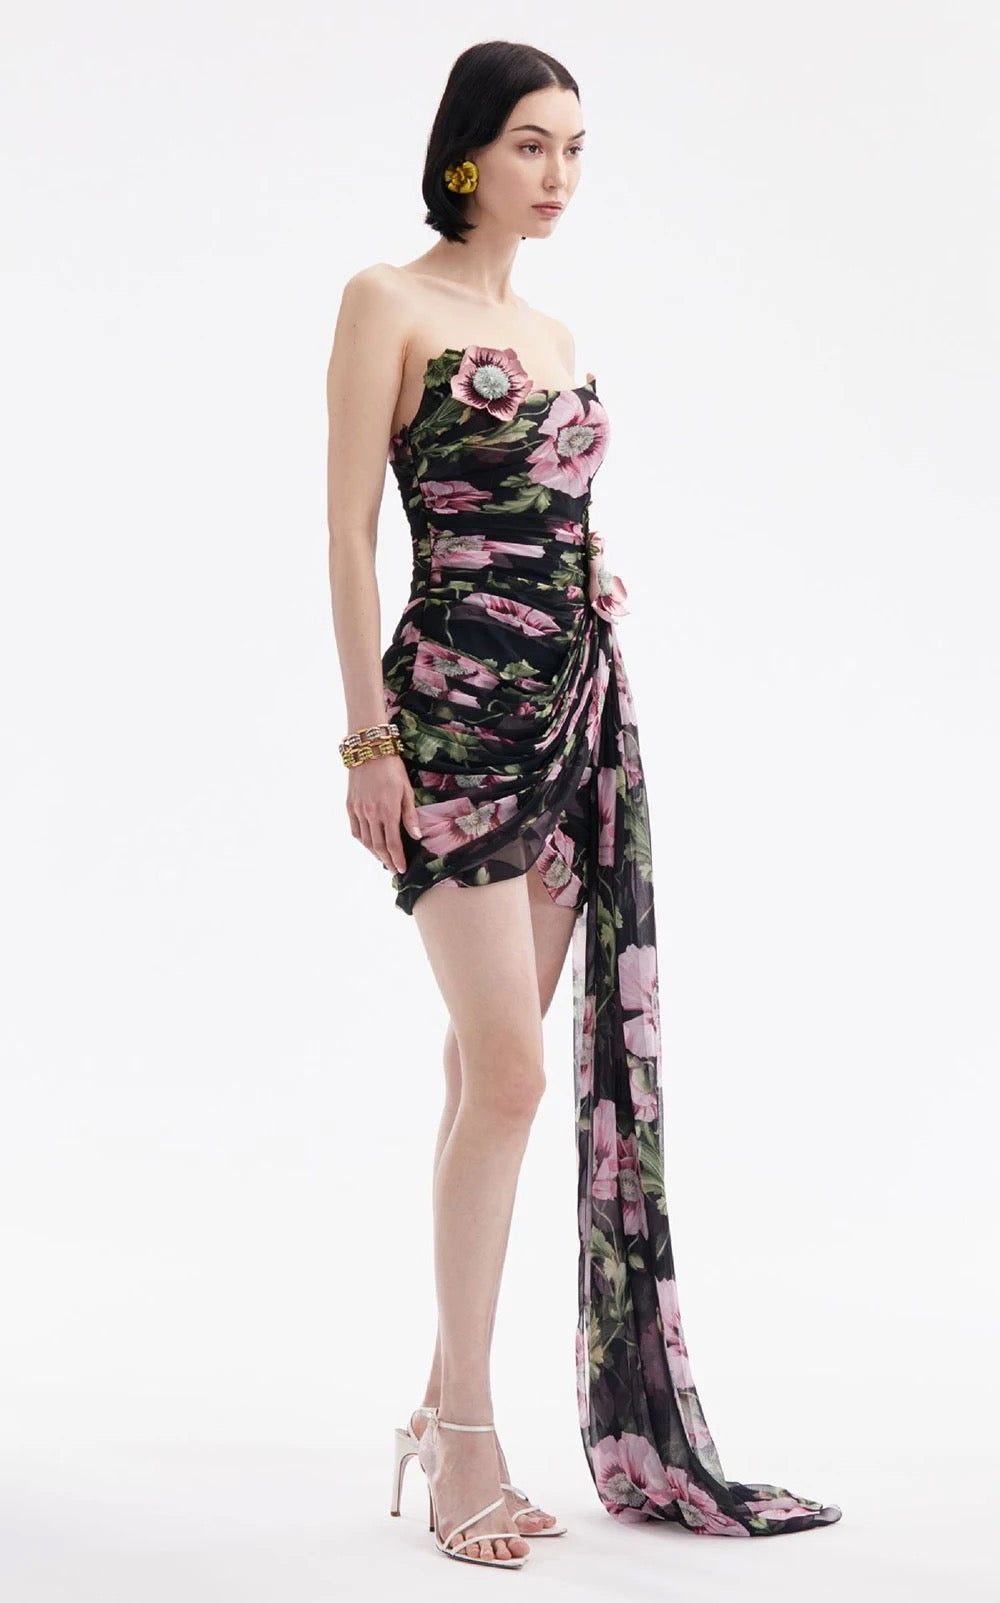 3D Flower Print Strapless Hanging Mesh Sexy Tight Mini Dress